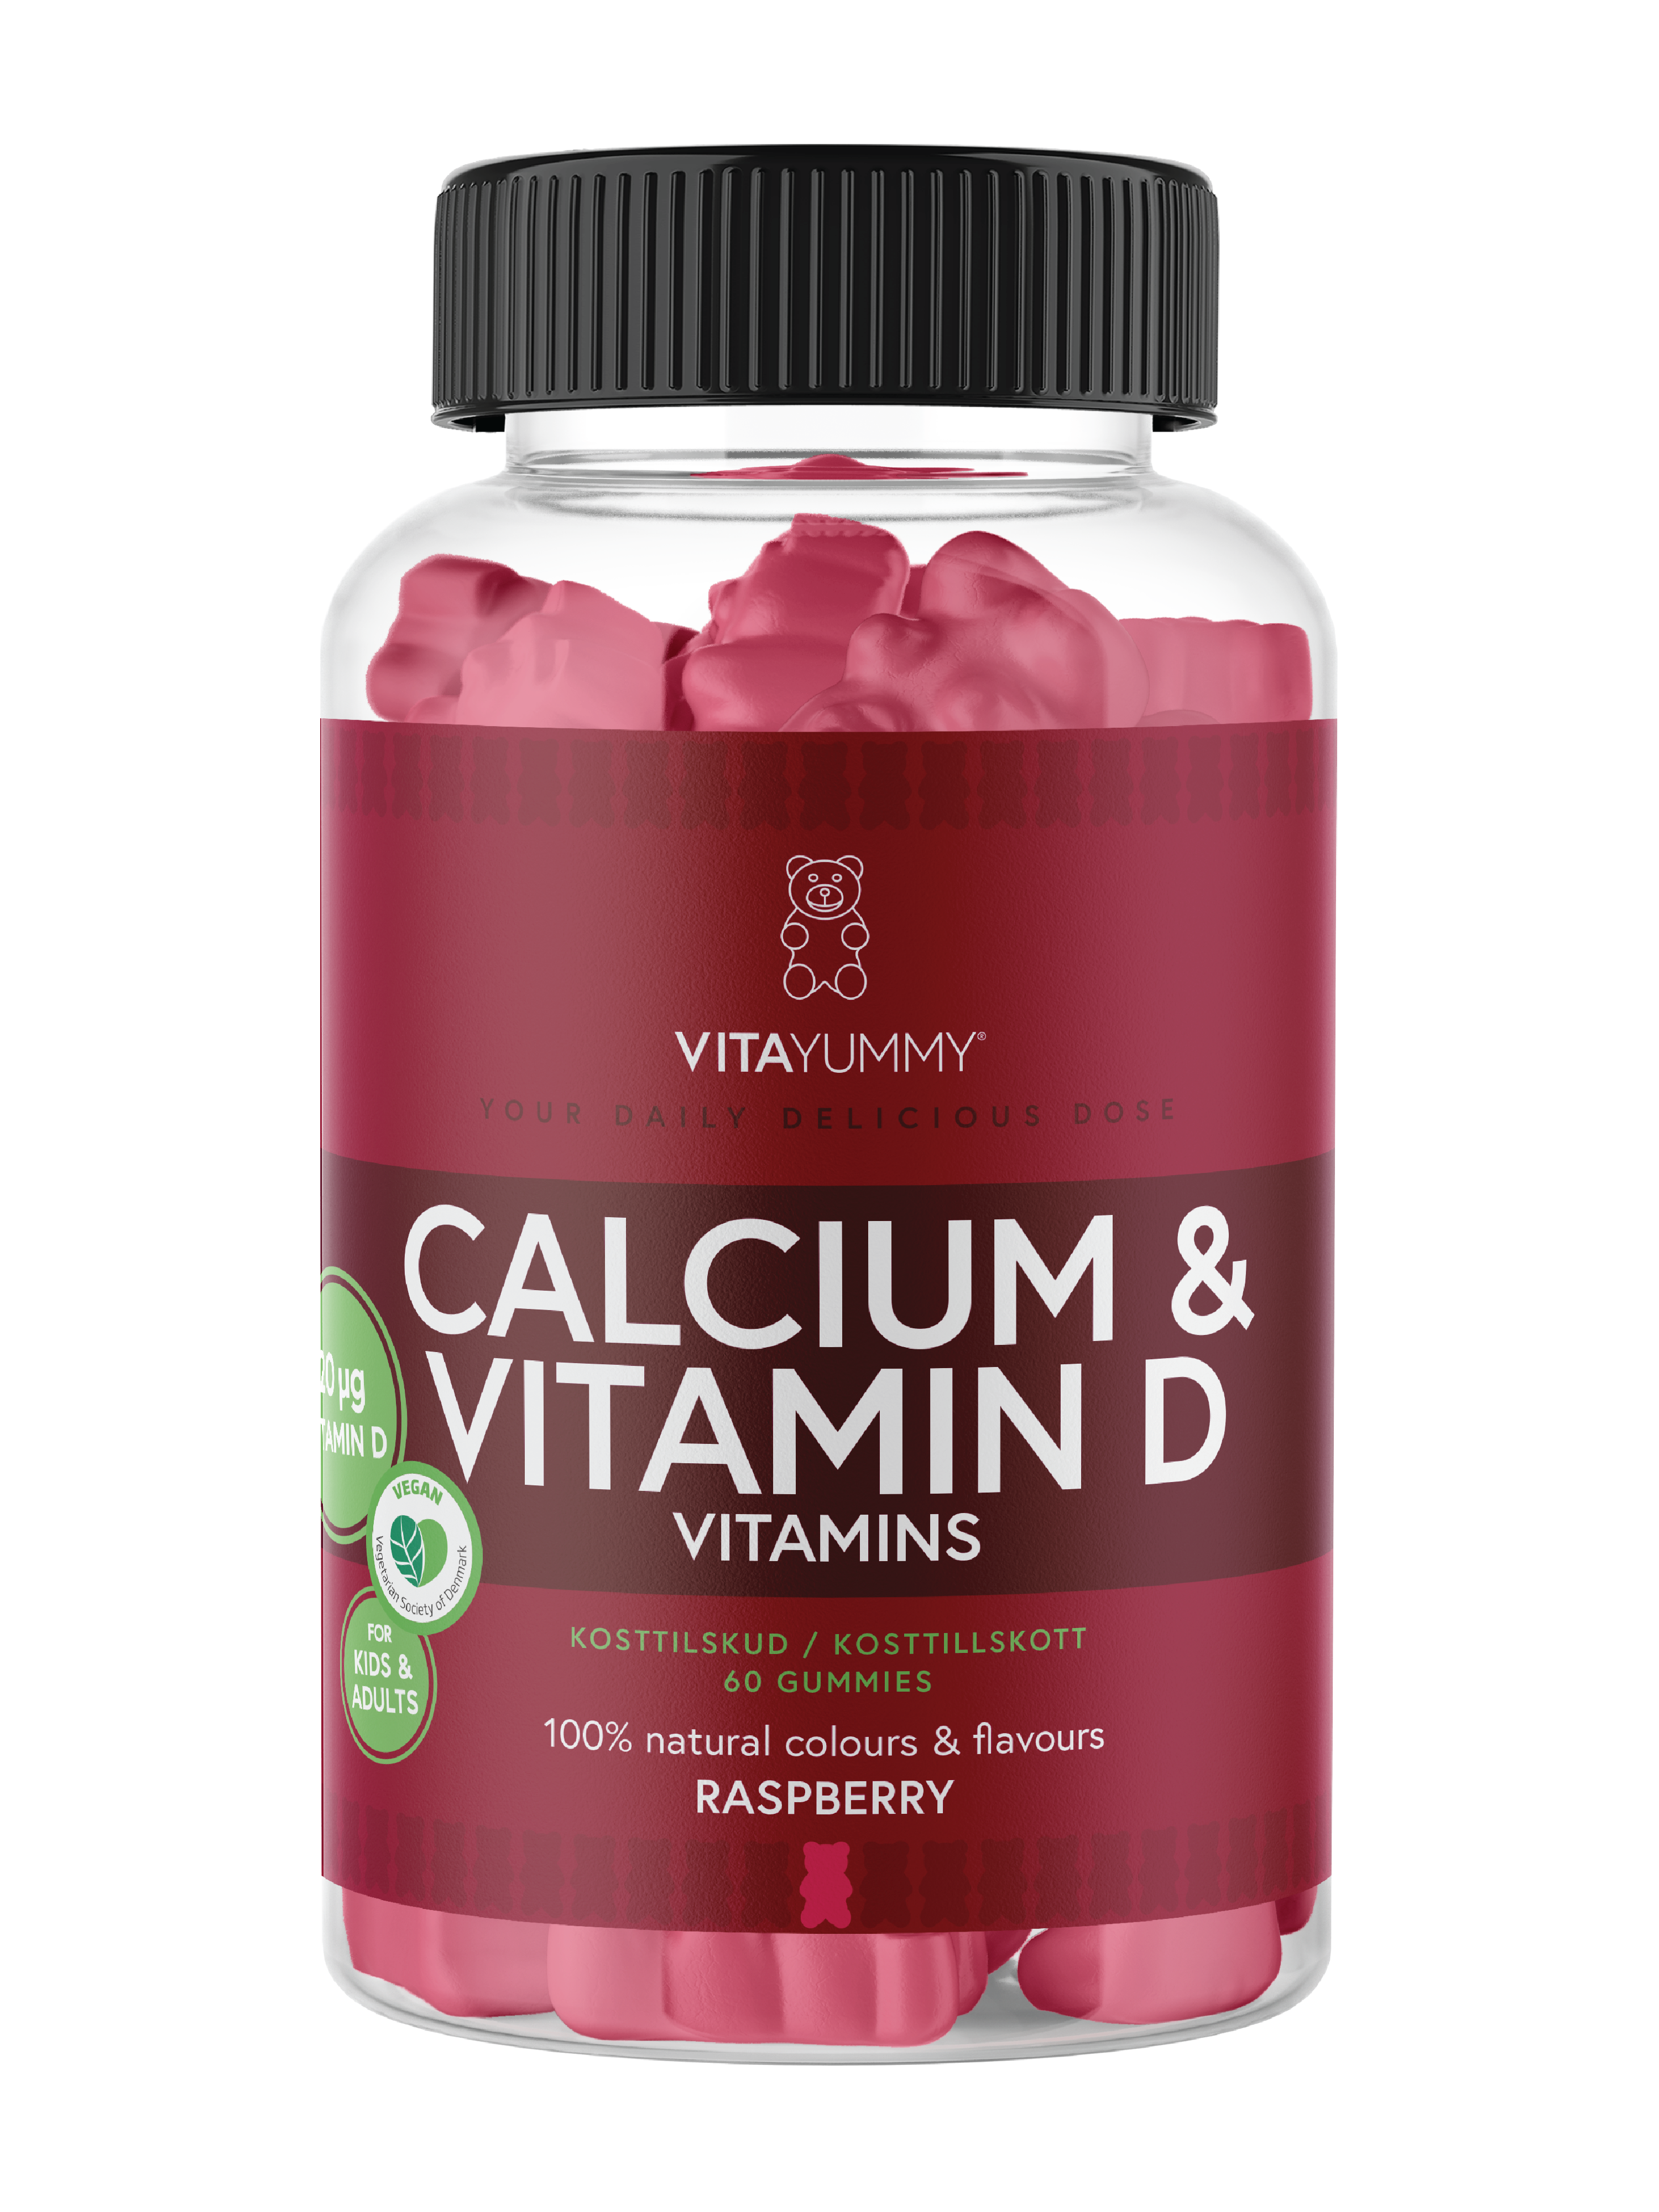 VitaYummy Calcium & Vitamin D Vitamins, Bringebær, 60 stk.